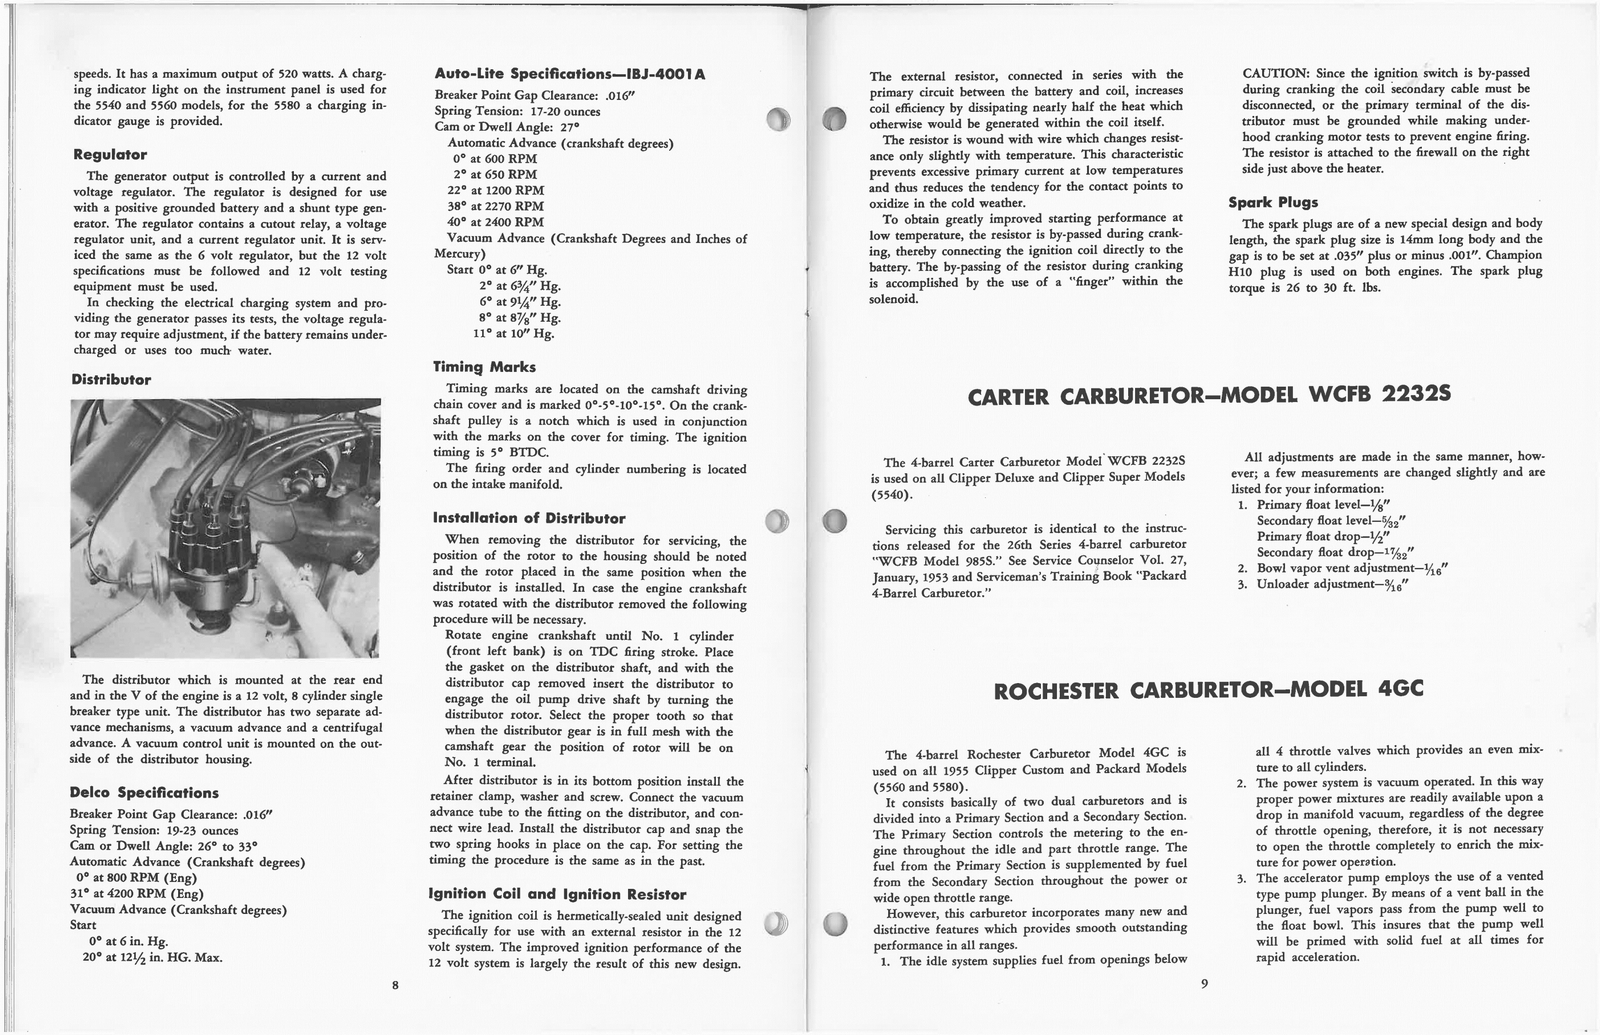 n_1955 Packard Sevicemens Training Book-08-09.jpg